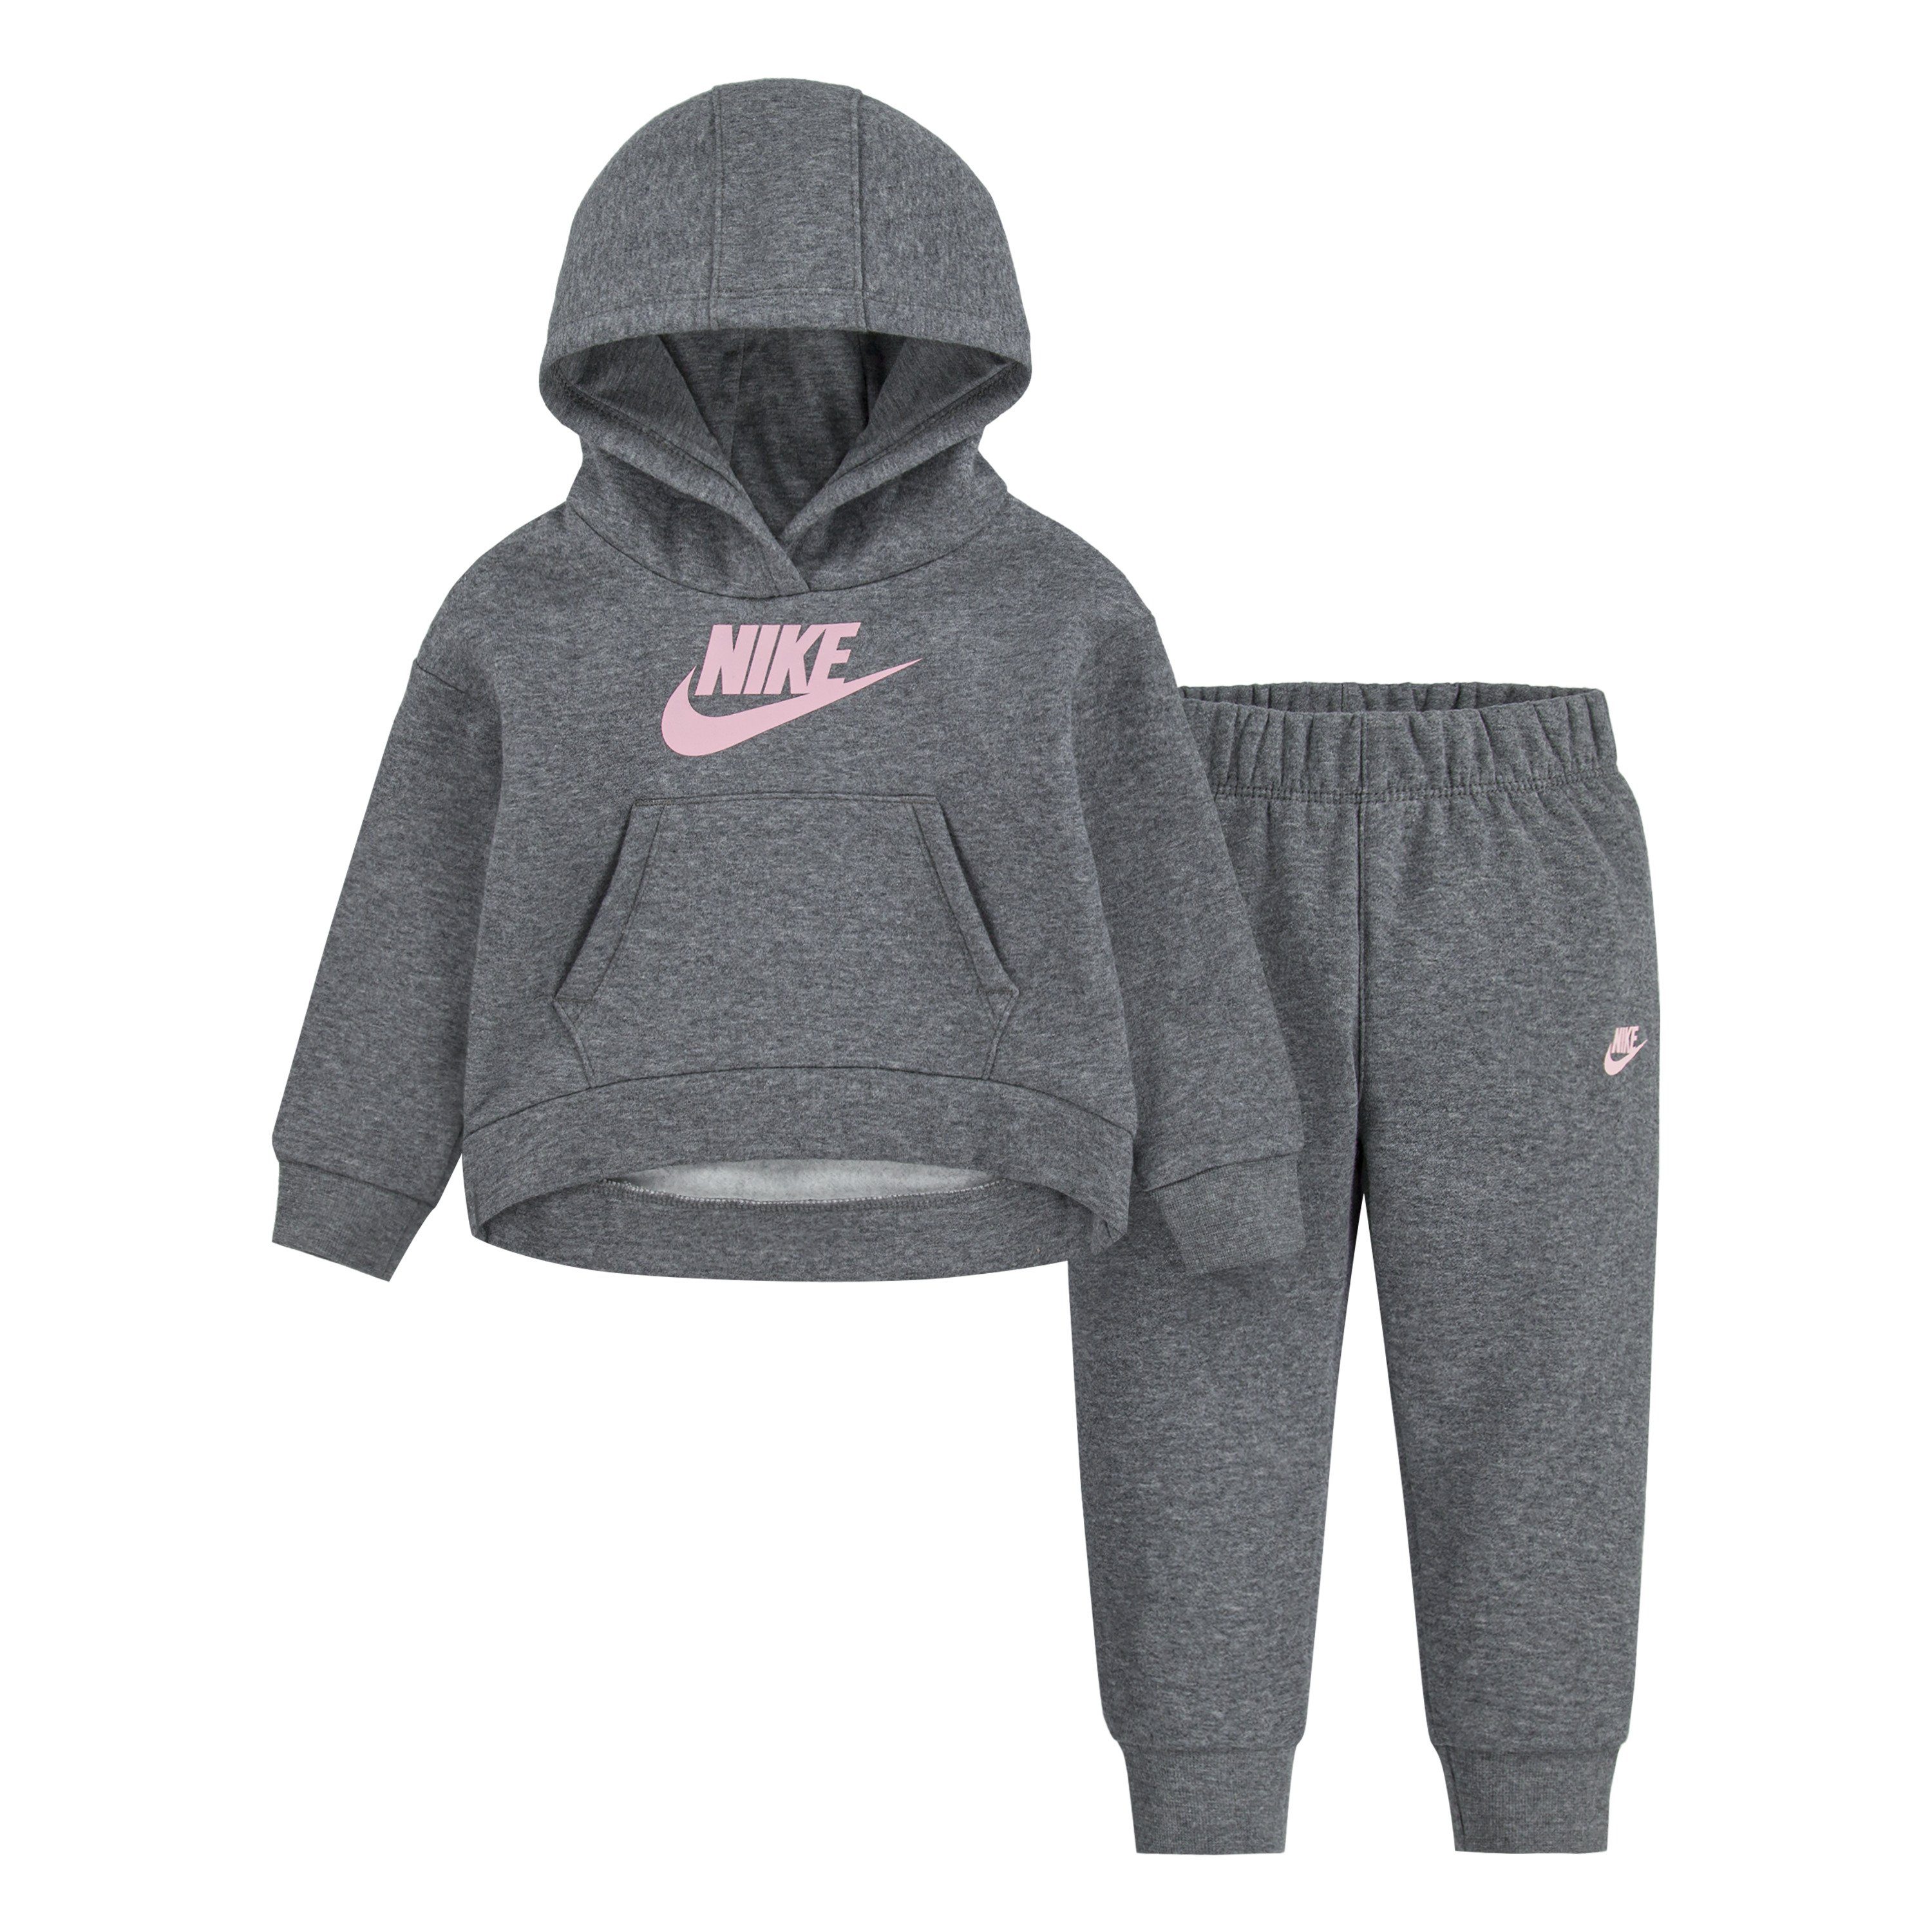 Auch neue Produkte sind verfügbar! Nike Sportswear Jogginganzug CLUB FLEECE SET grau-meliert